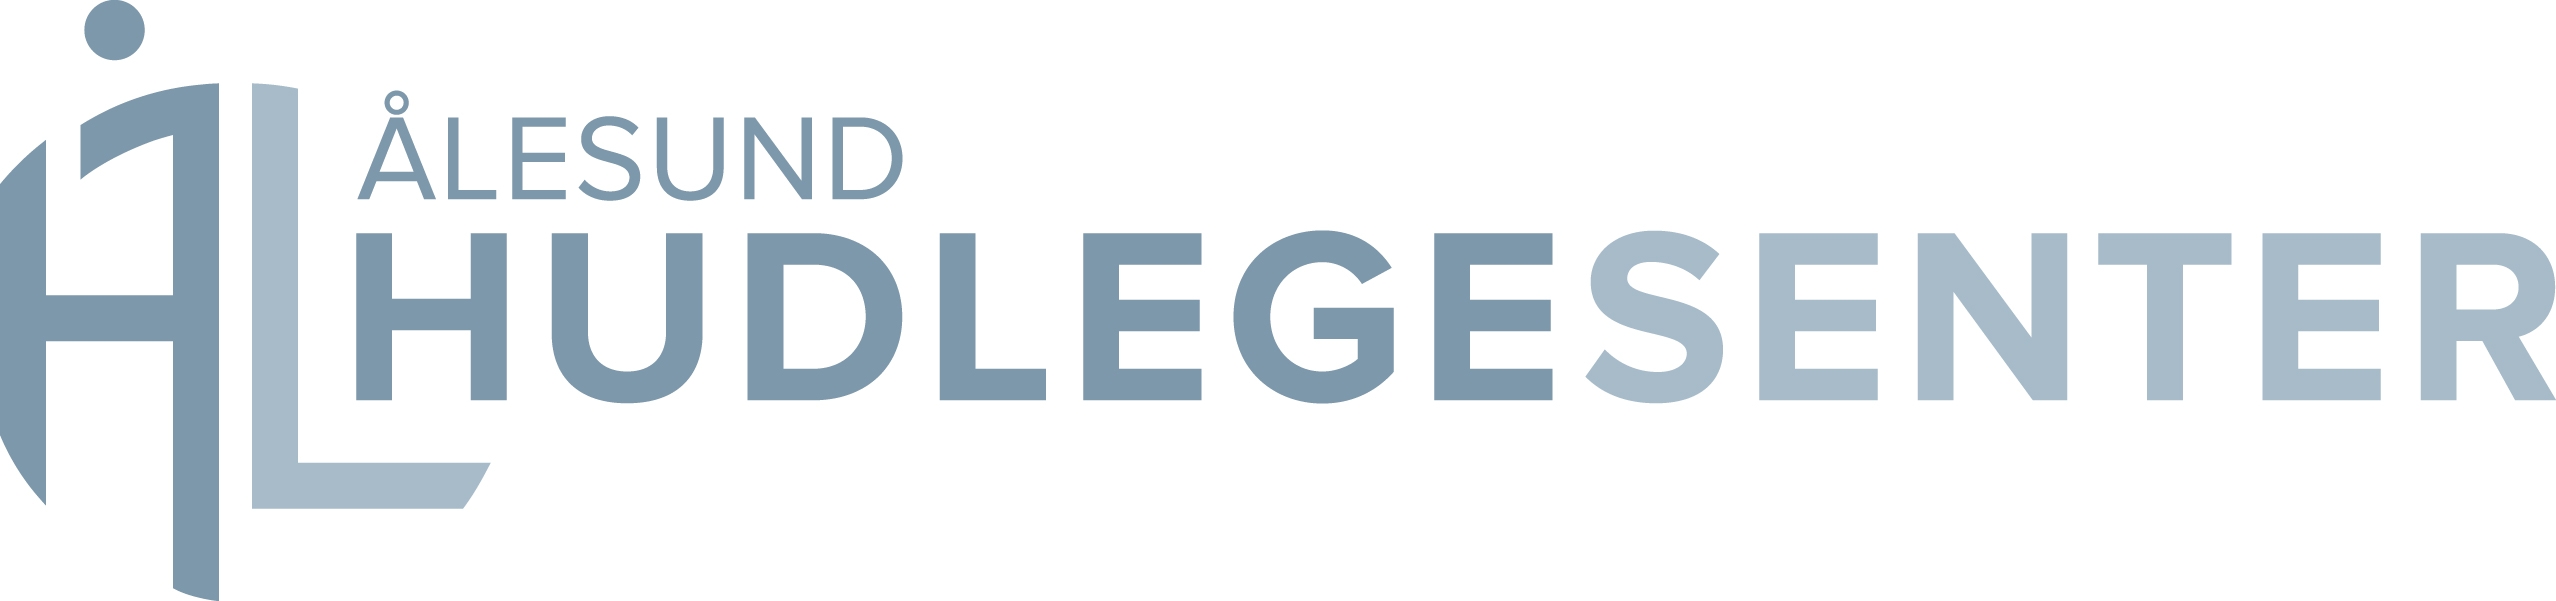 Ålesund Hudlegesenter  sin logo